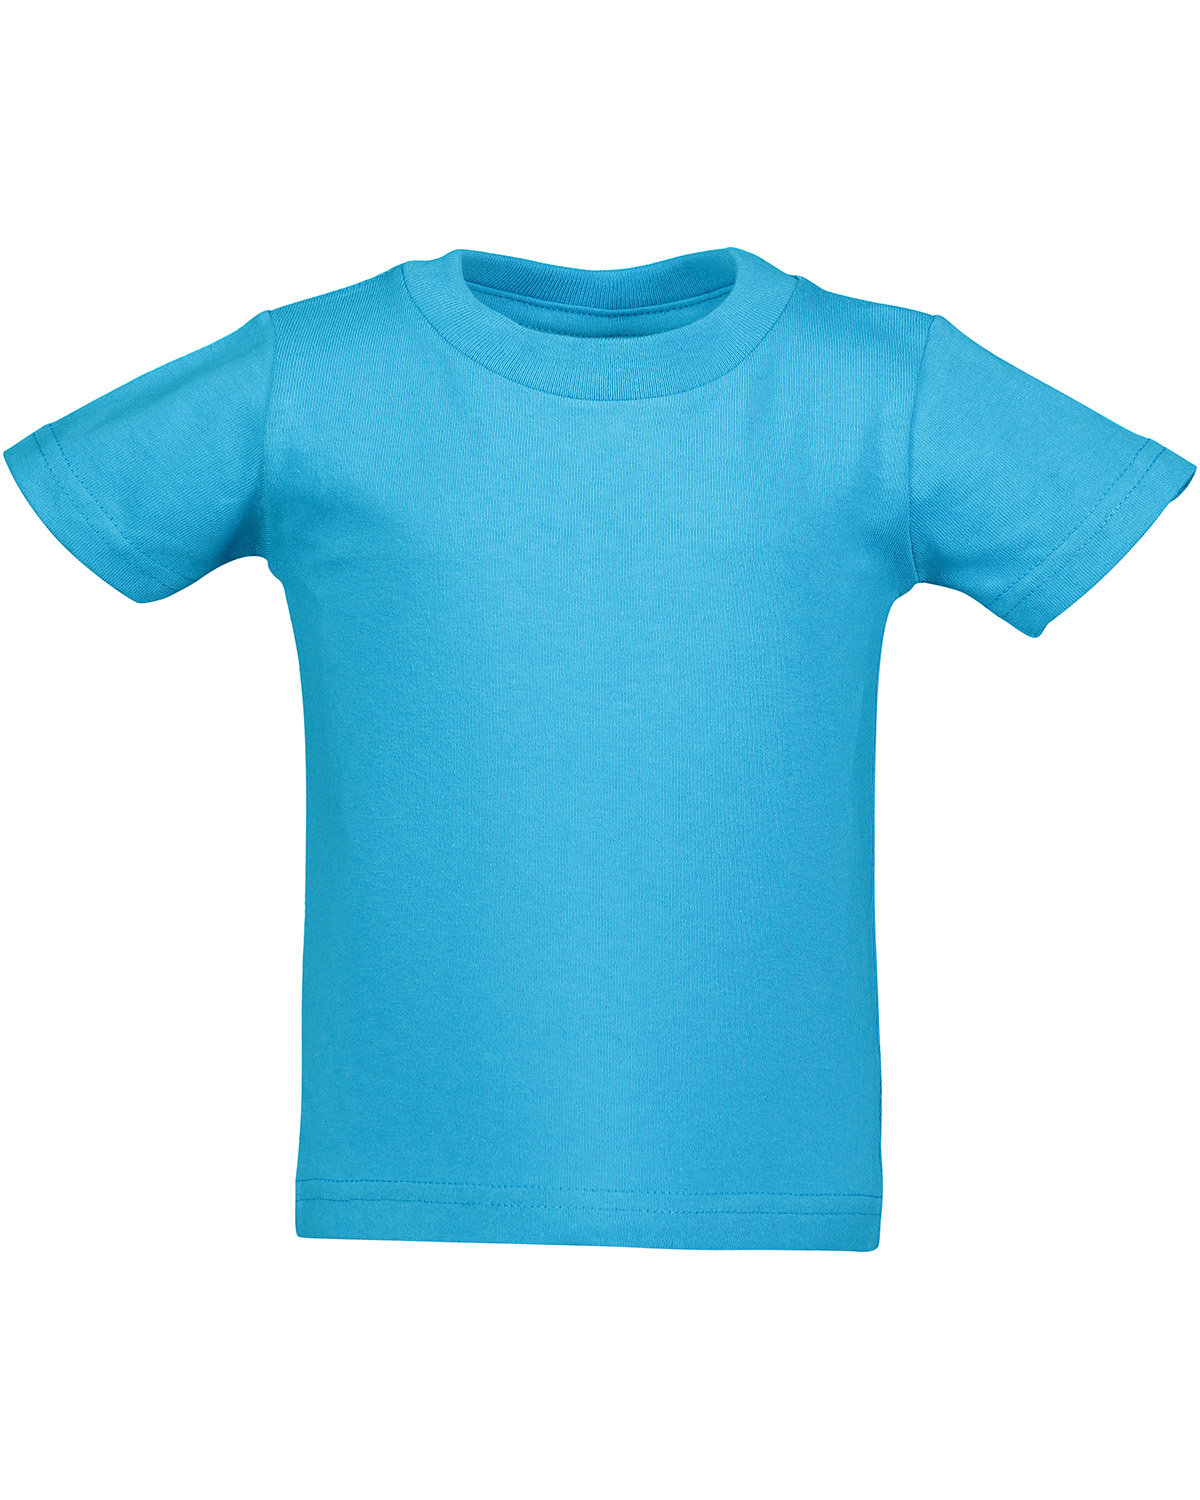 Rabbit Skins Infant Cotton Jersey T-Shirt turquoise 